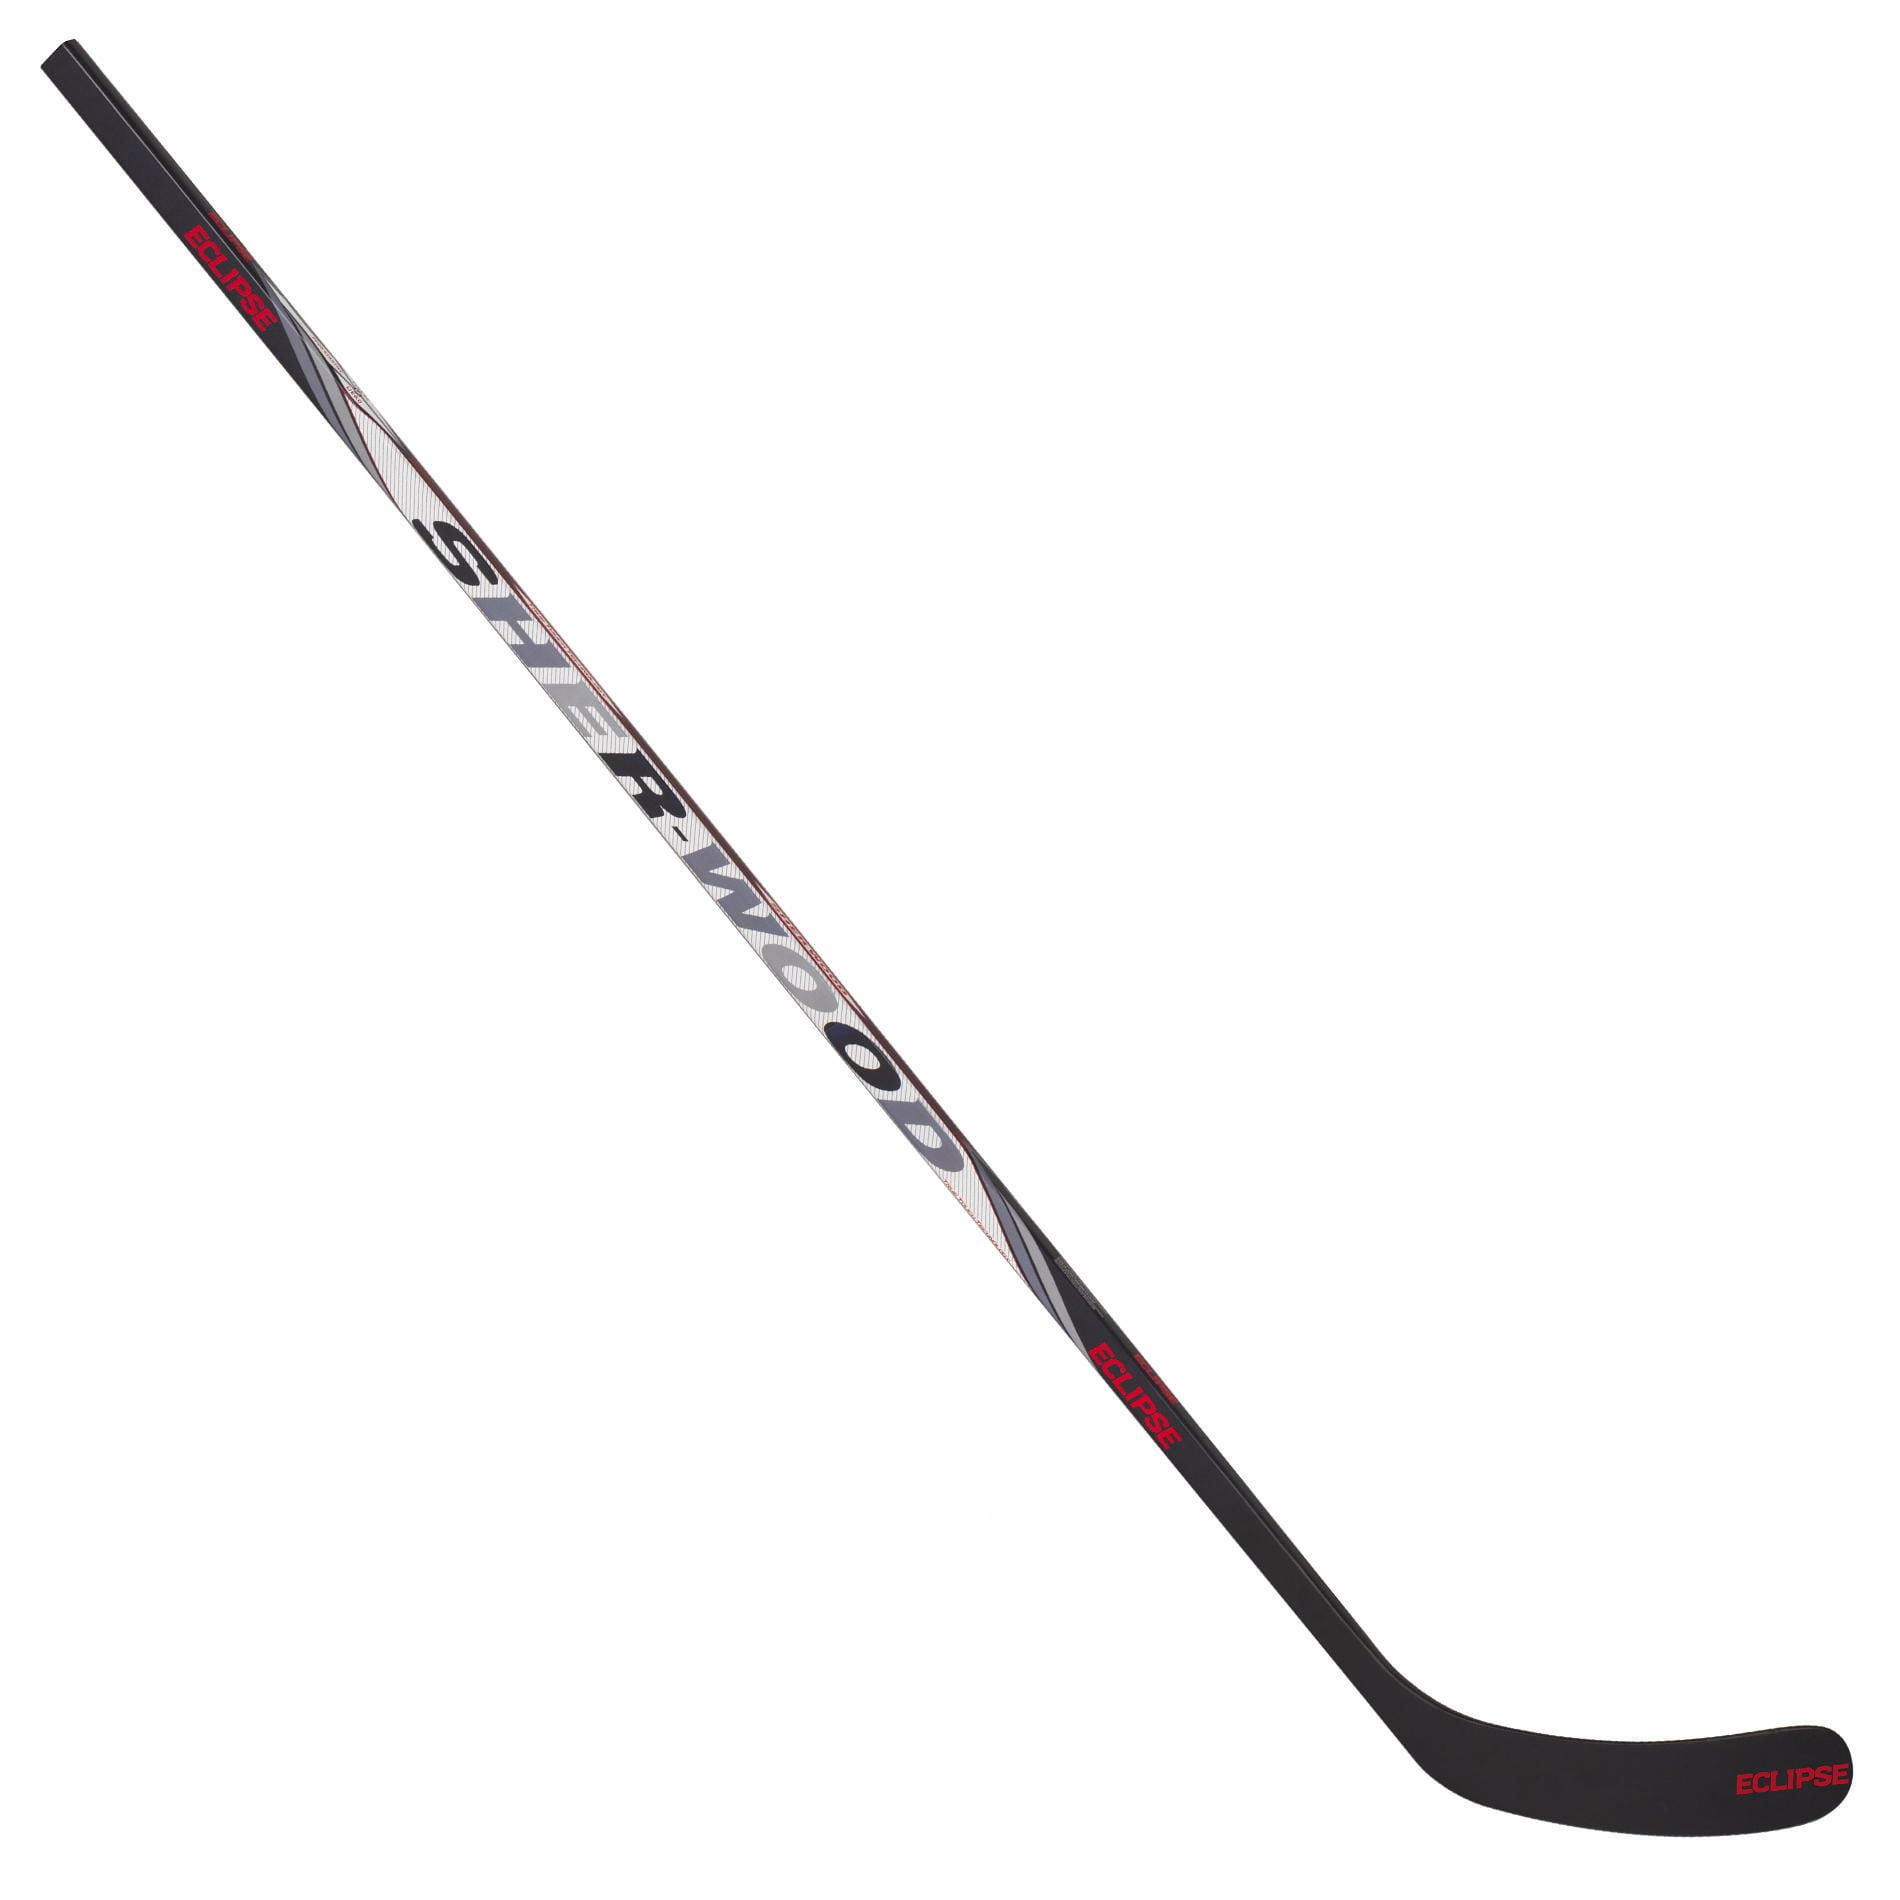 CCM Jetspeed FT655 Ice Hockey Stick - Senior RH, Ice Hockey Stick-Right-handed  